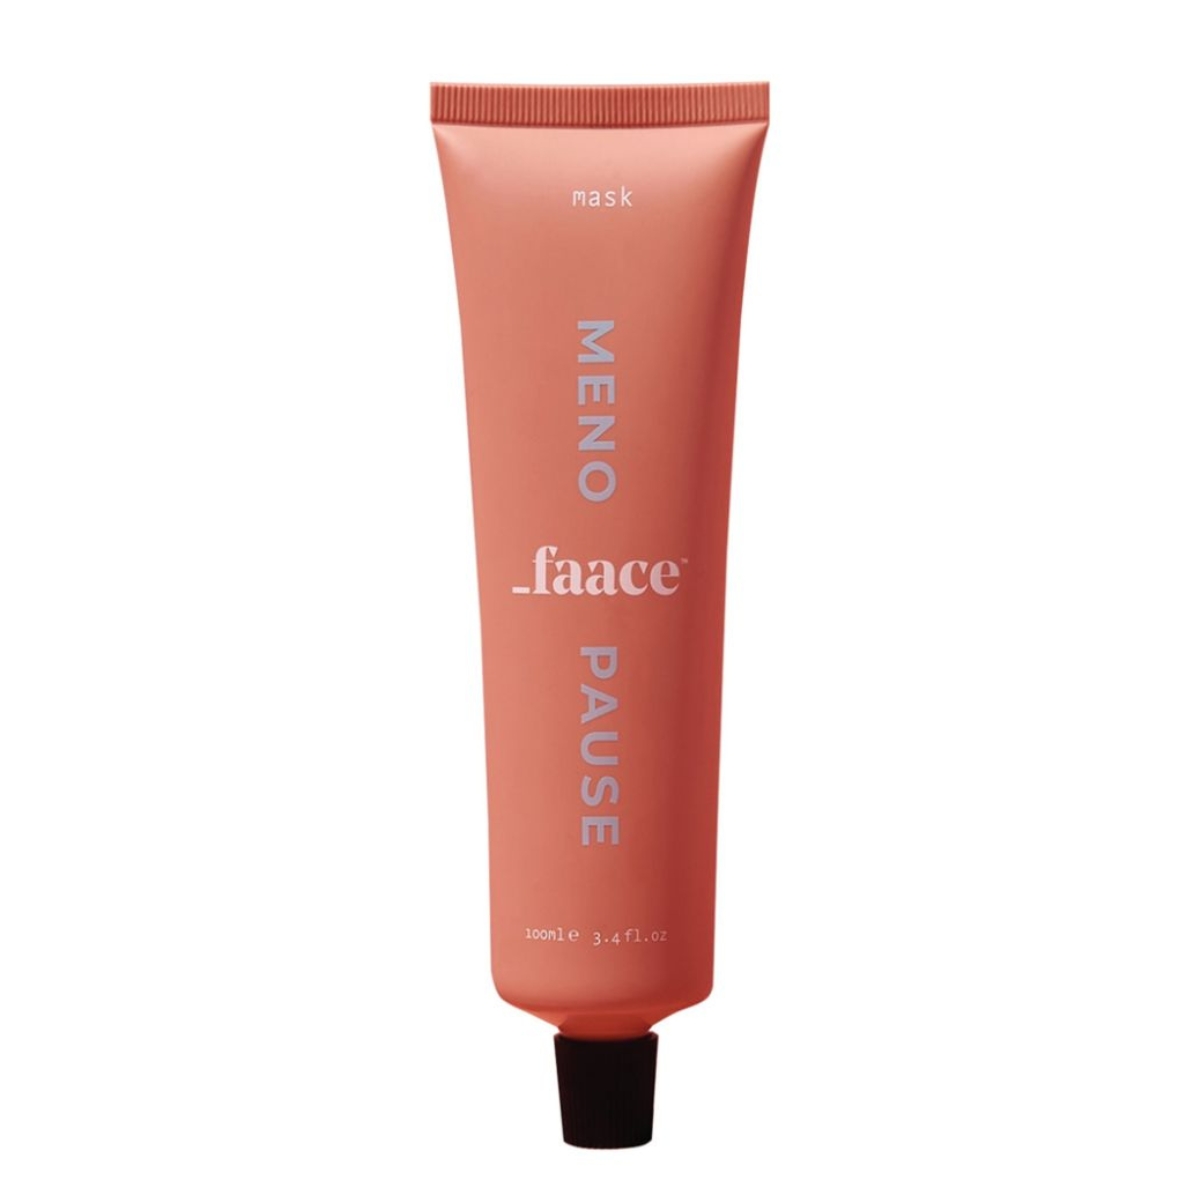 Face Menopause Faace Daily Face Cream